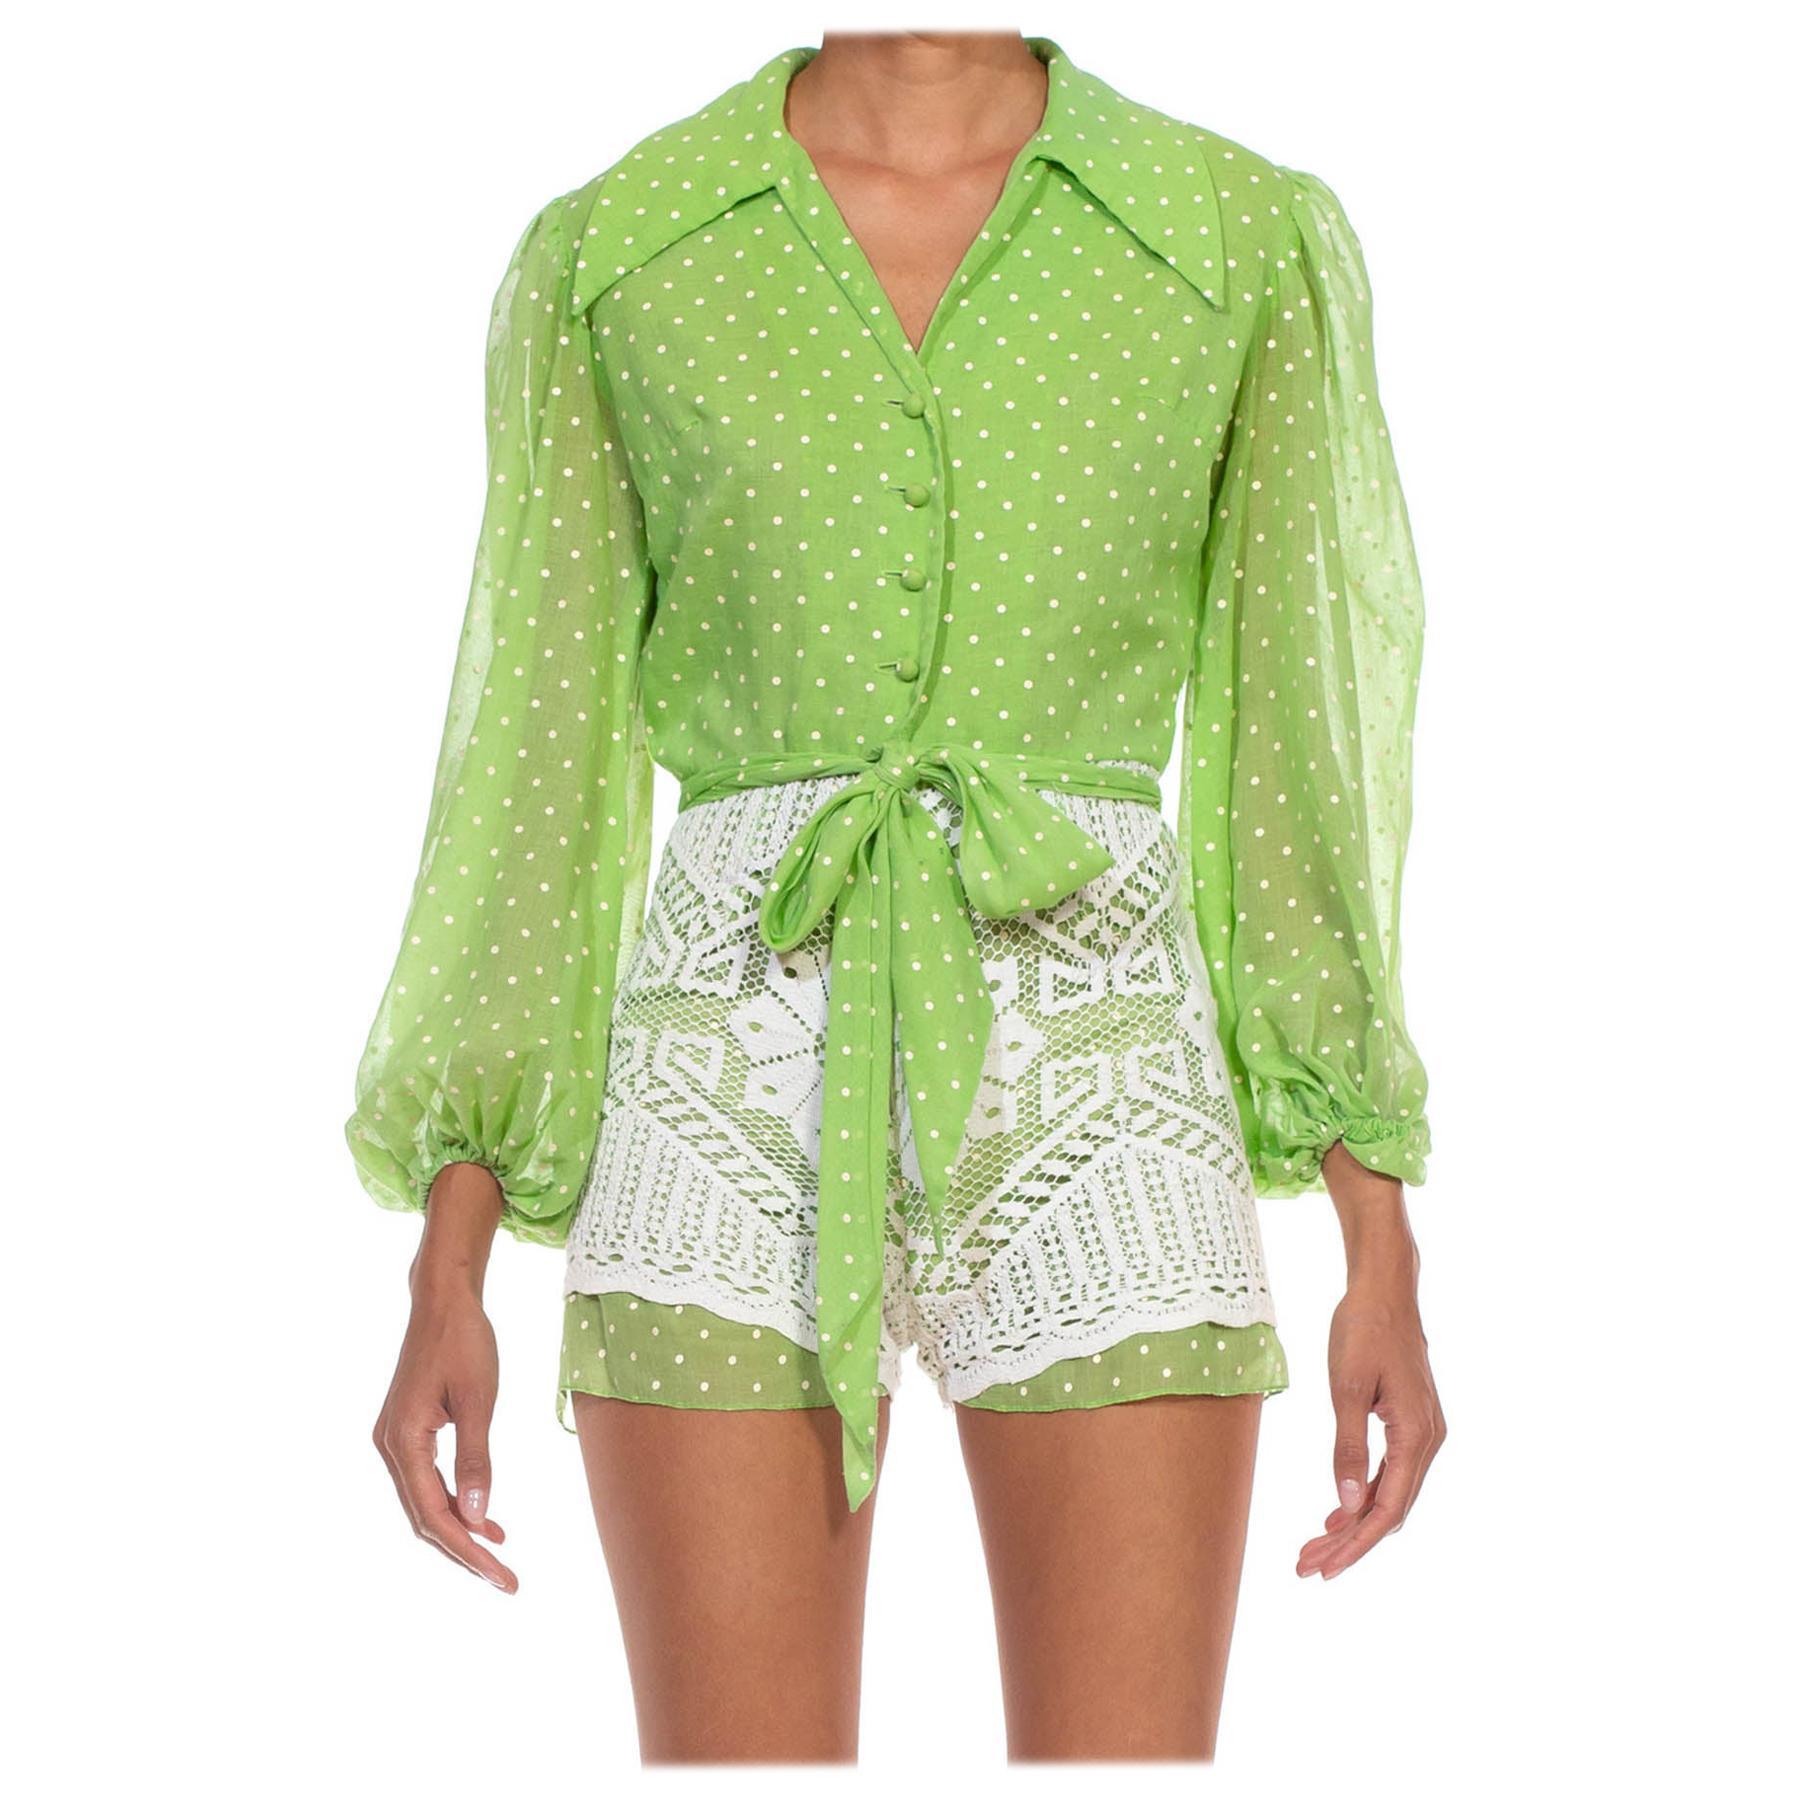 1960S Green & White Cotton Polka Dot Lace Skirt Romper